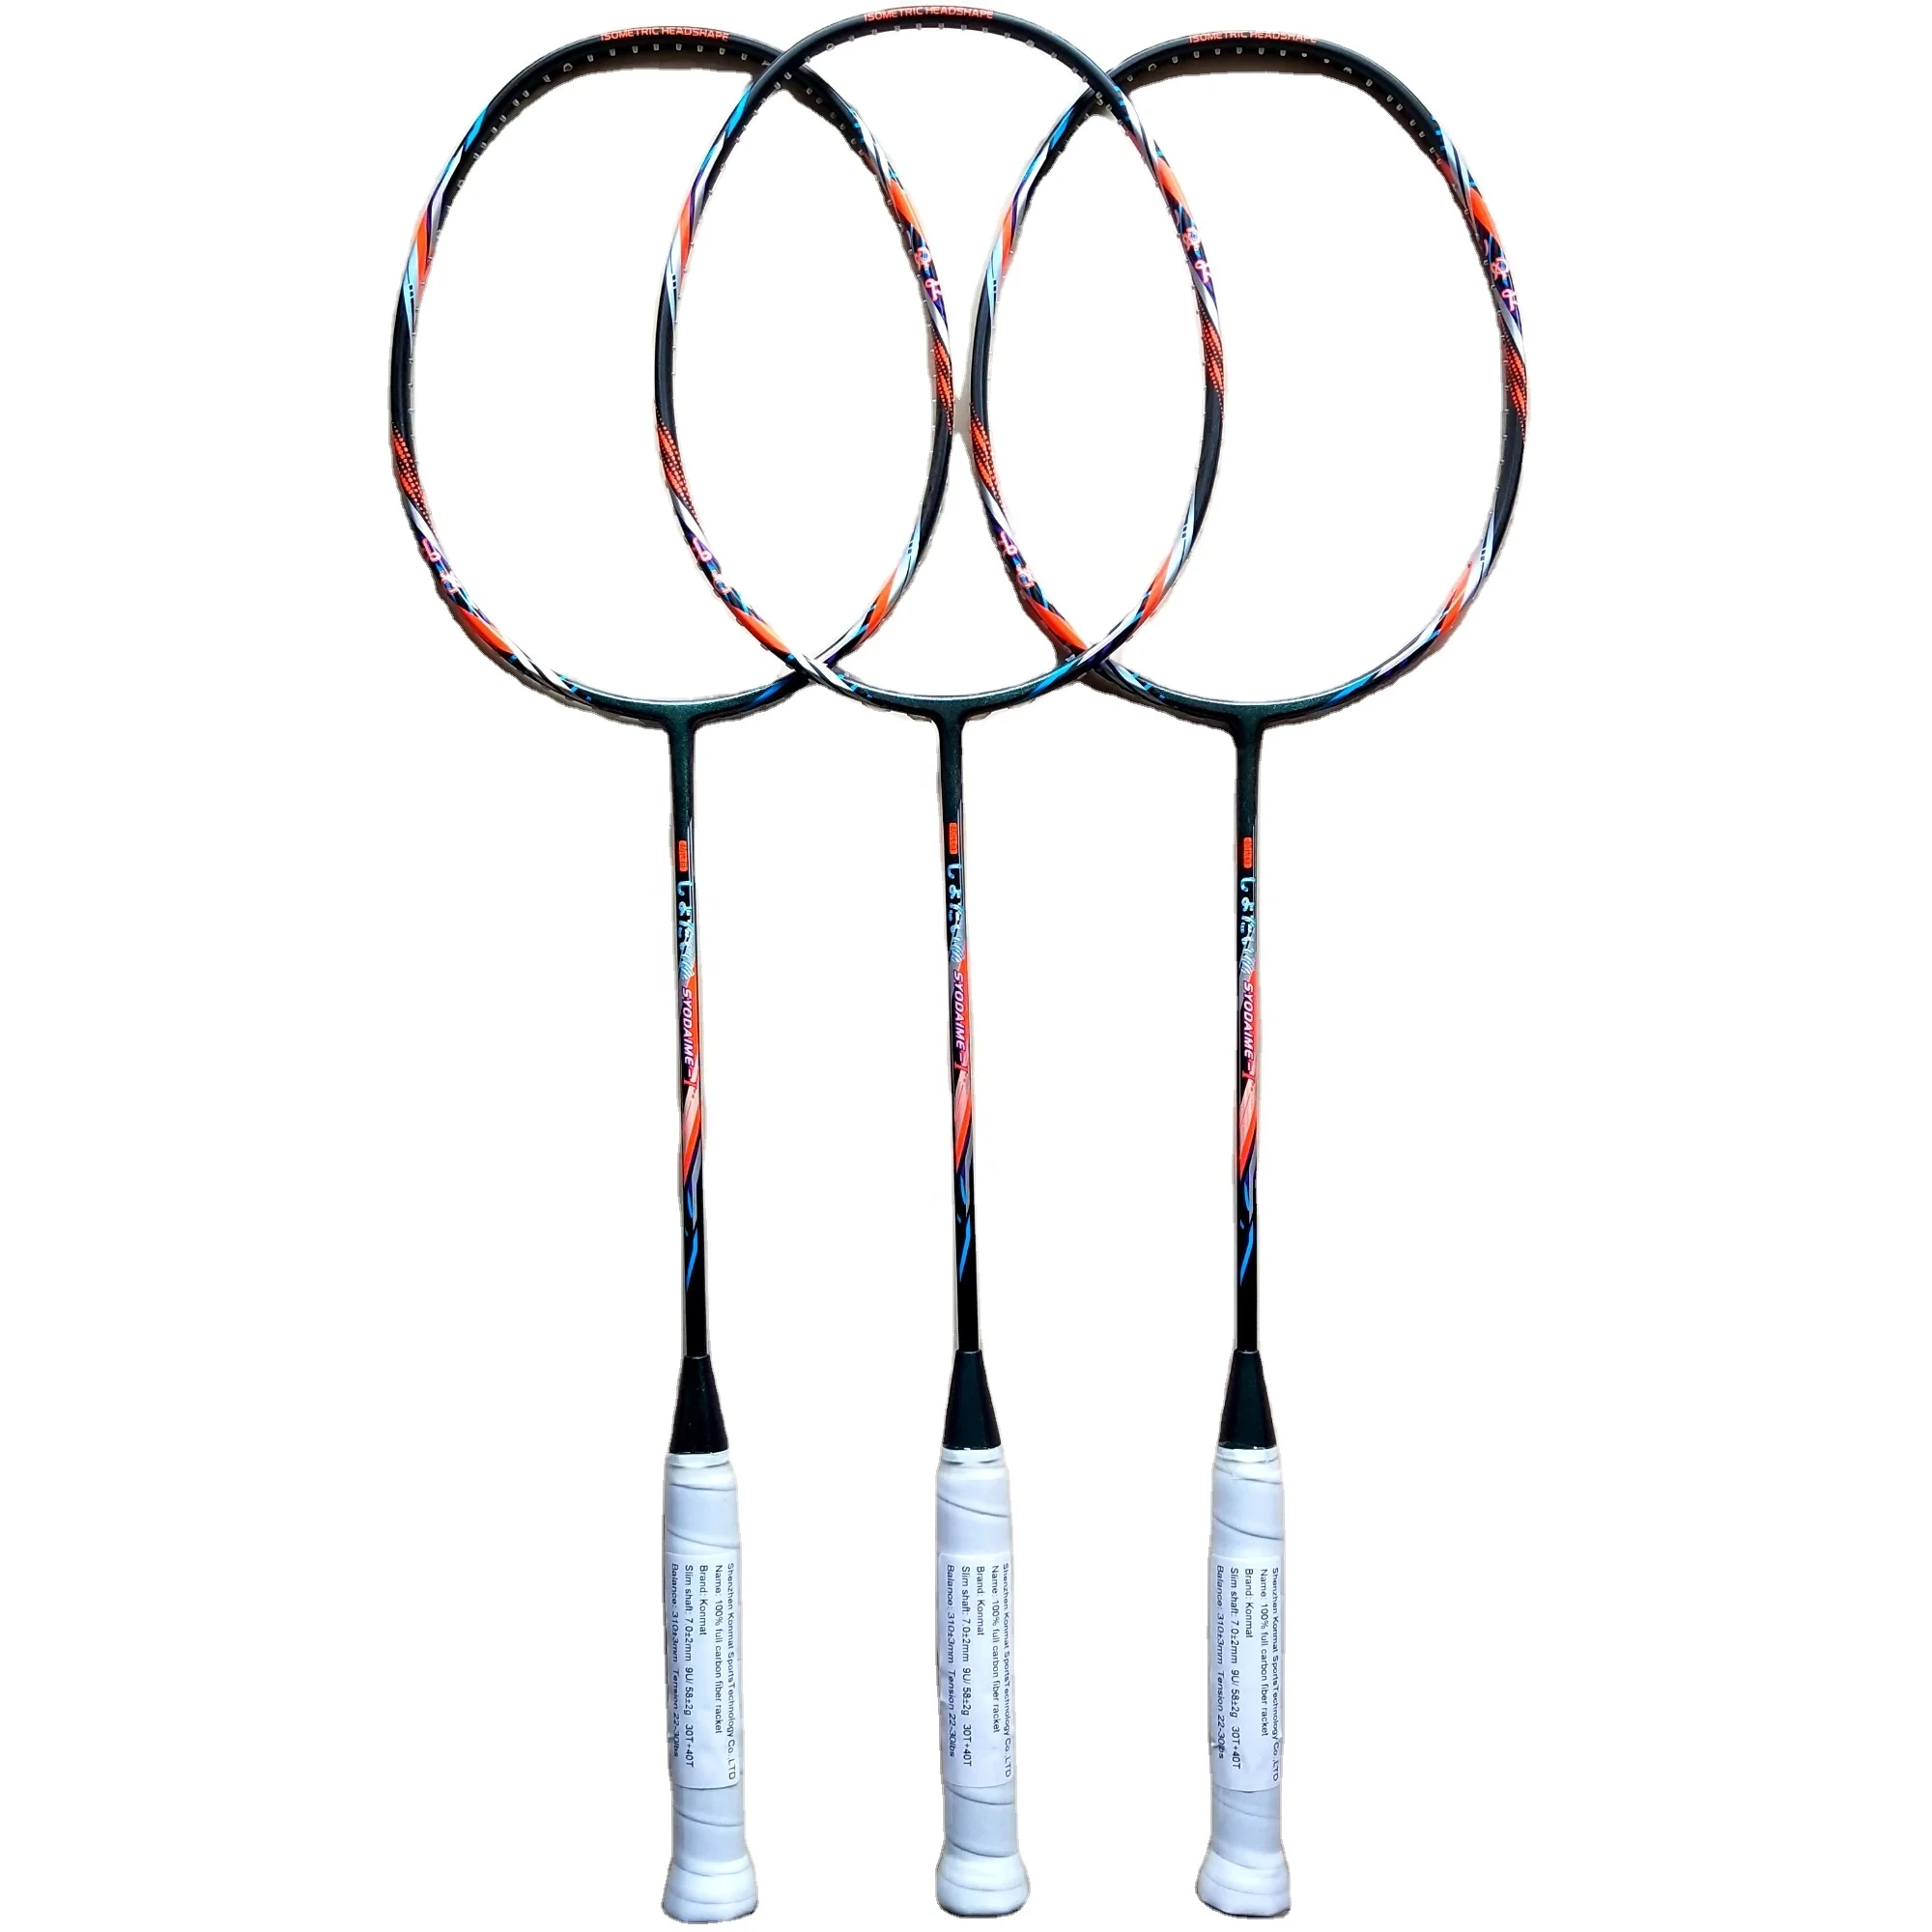 

9U 58g 30LBS Japan graphite fiber badminton racket badminton rackets from factory, Black/yellow or customized